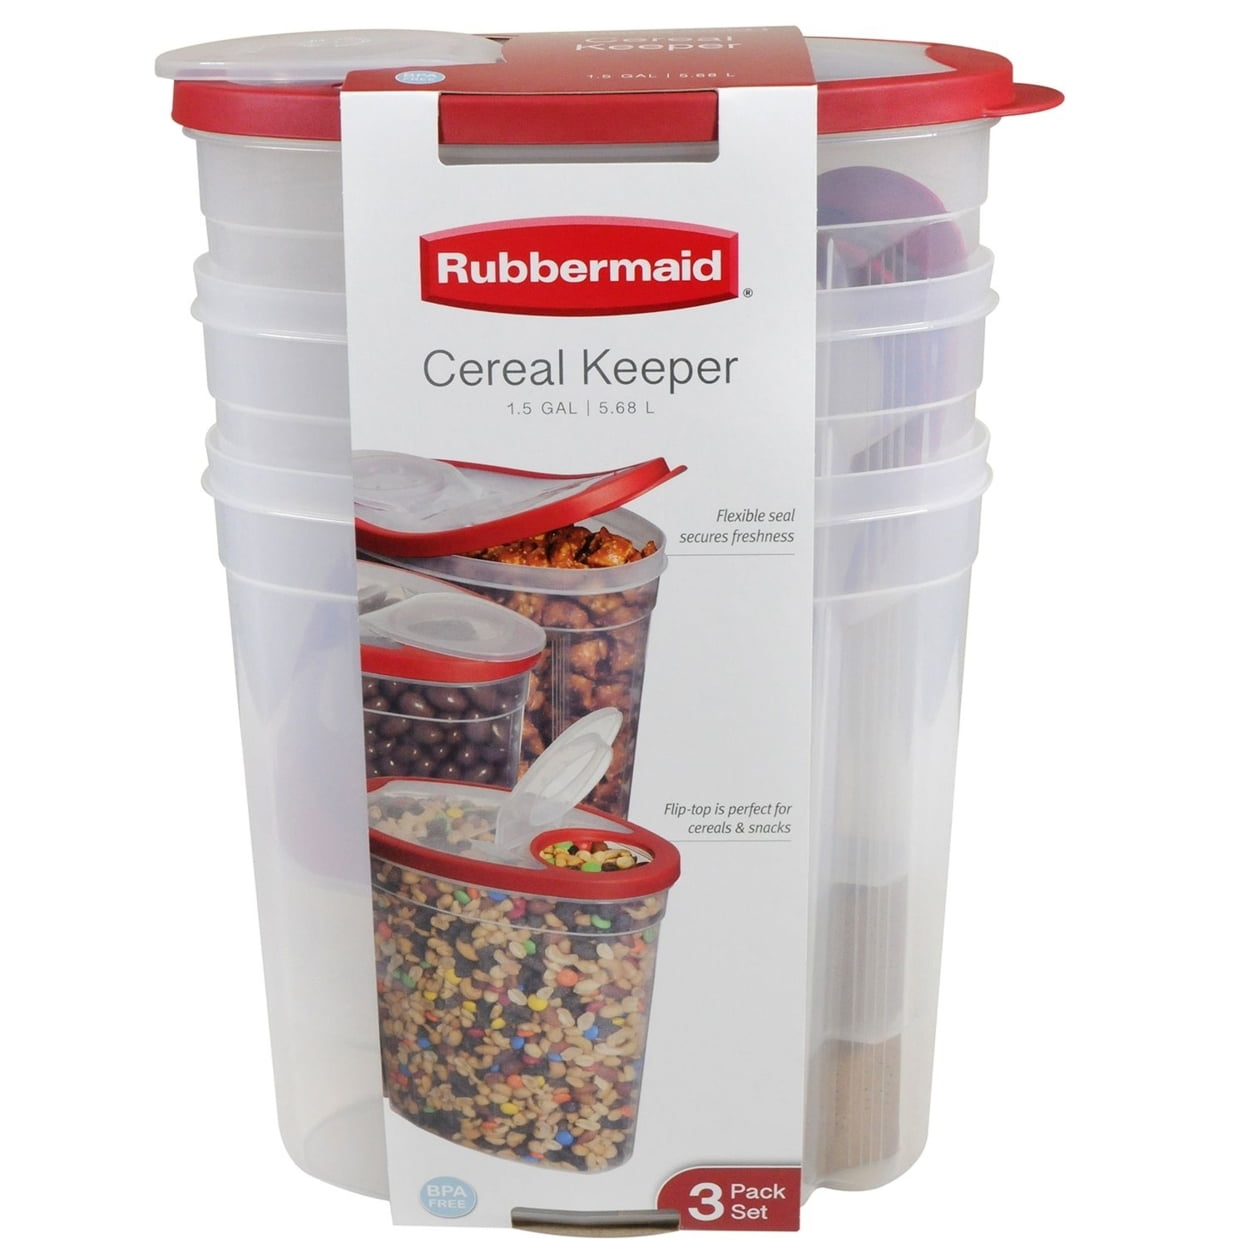 Rubbermaid Cereal Keeper, 1.5 gal